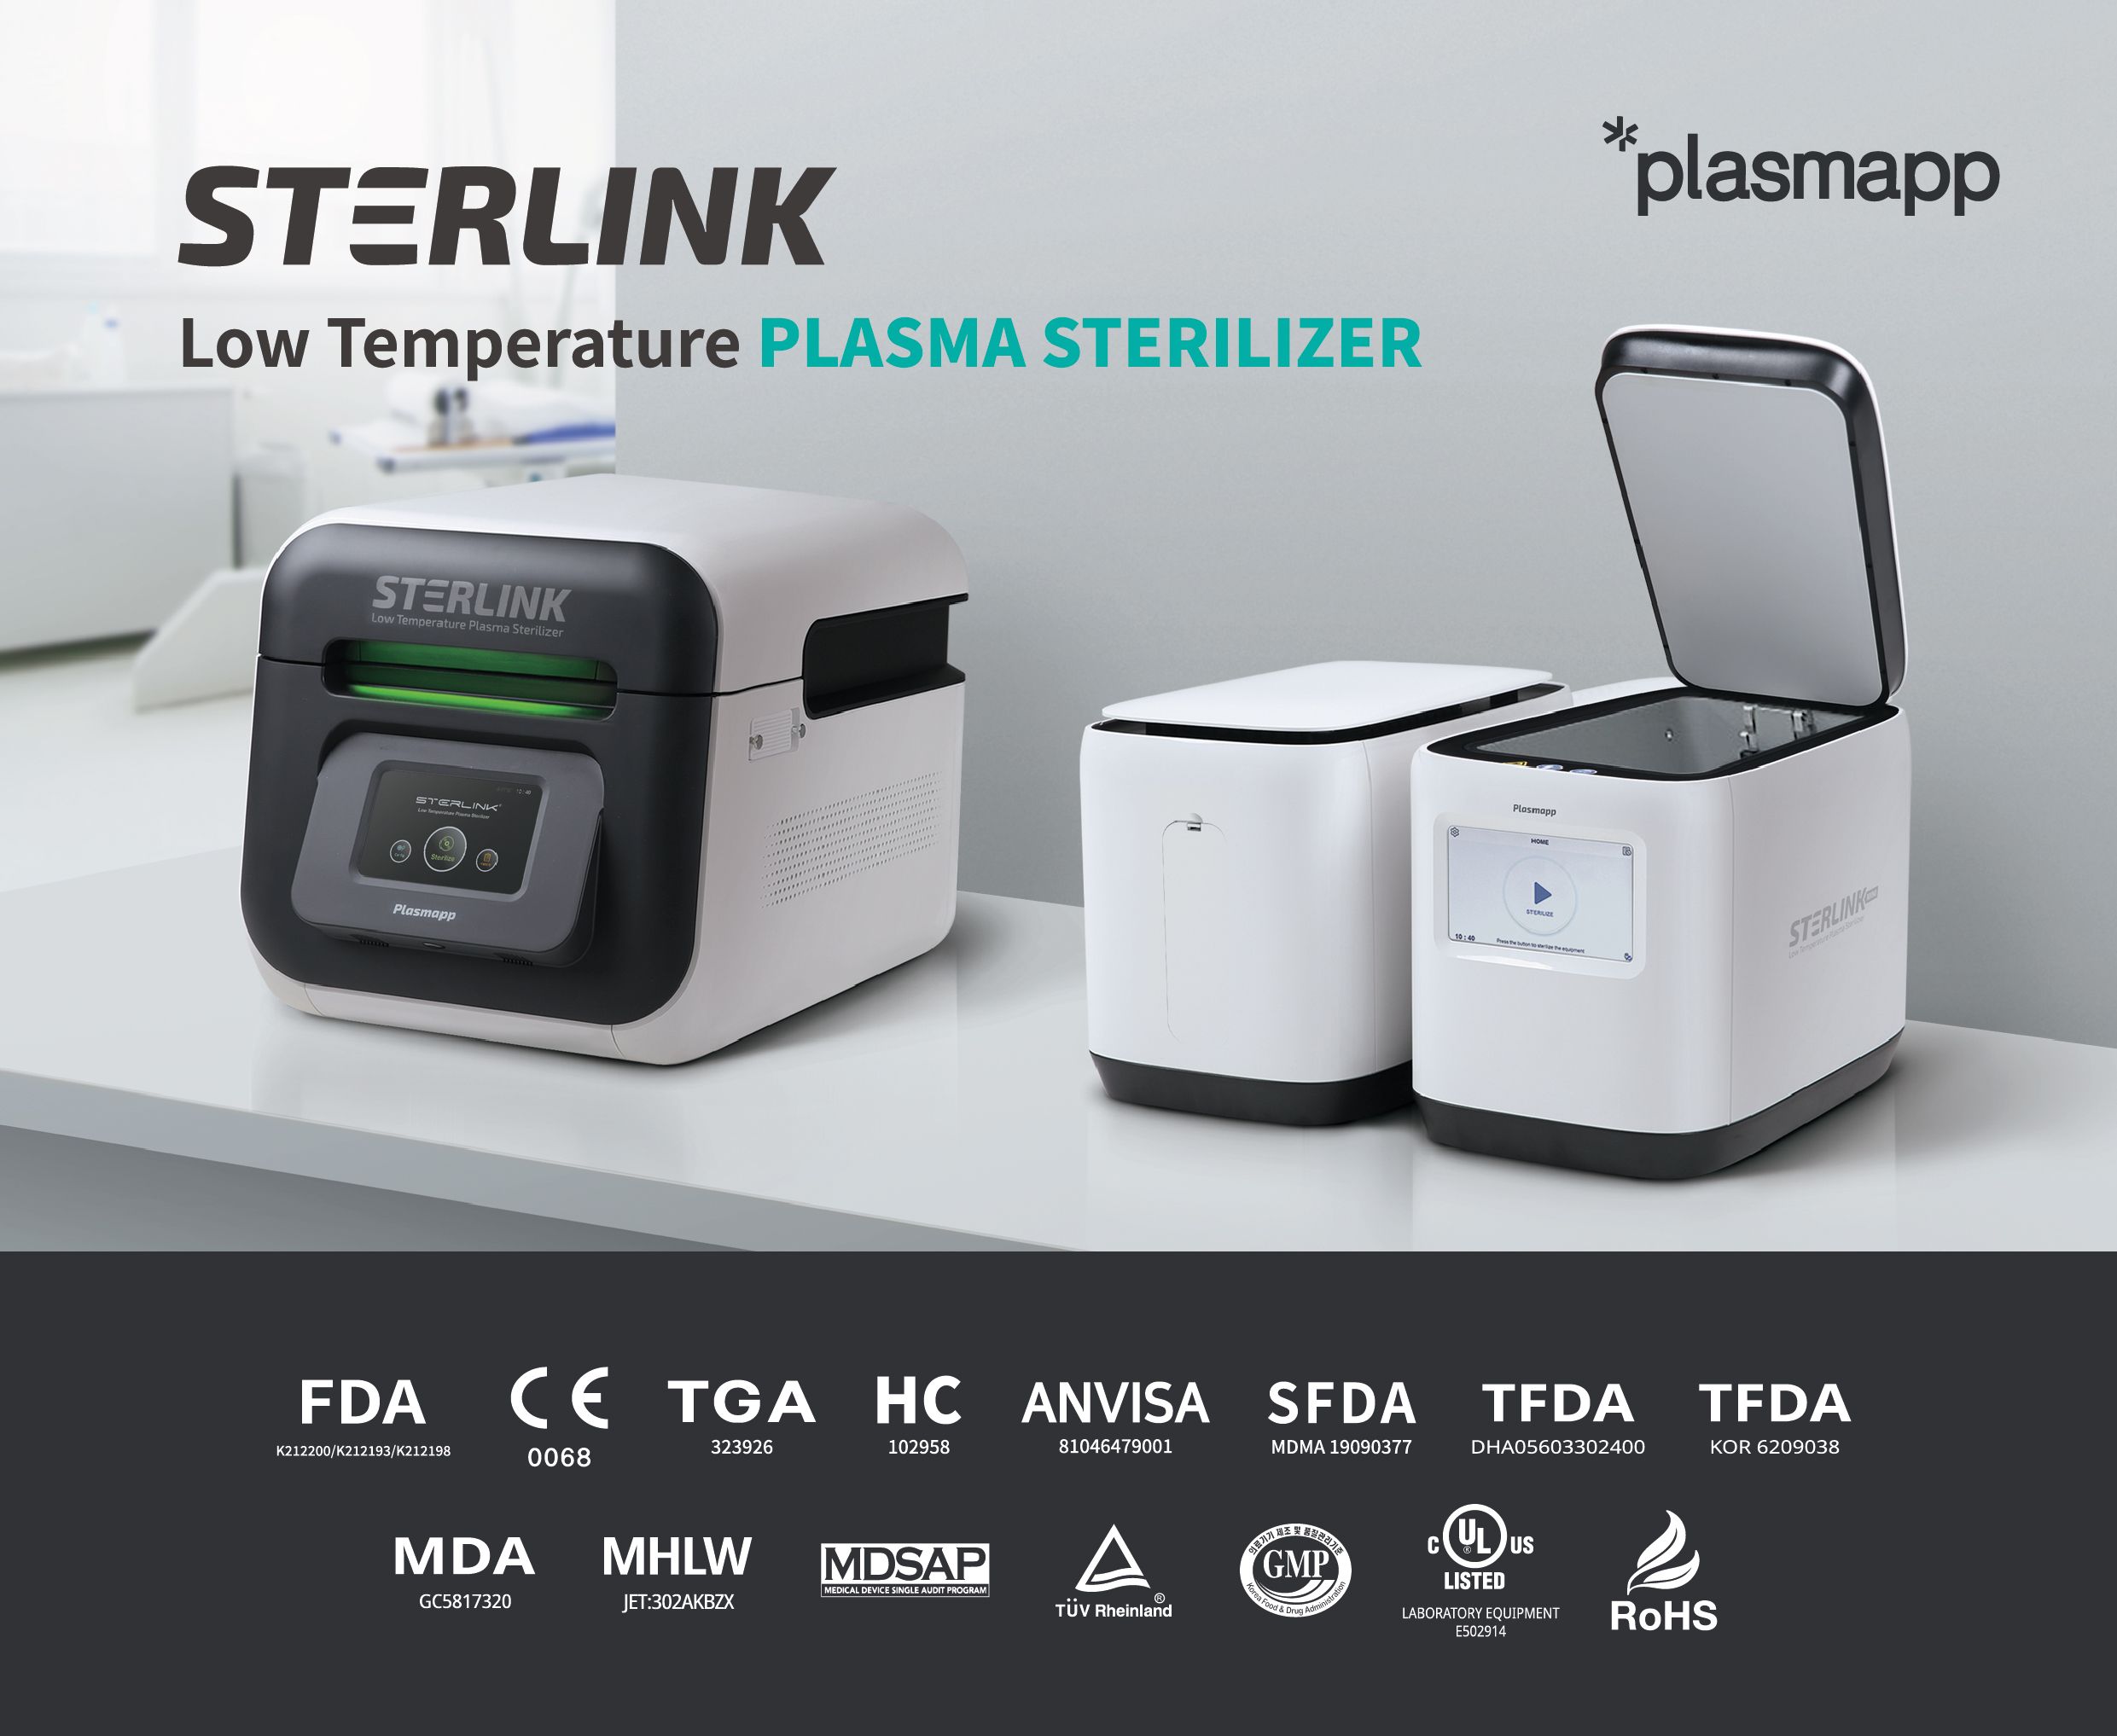 Low temperature sterilization process via Plasmapp's Medi-DSP™ (Direct Sterilization with Plasma) technology